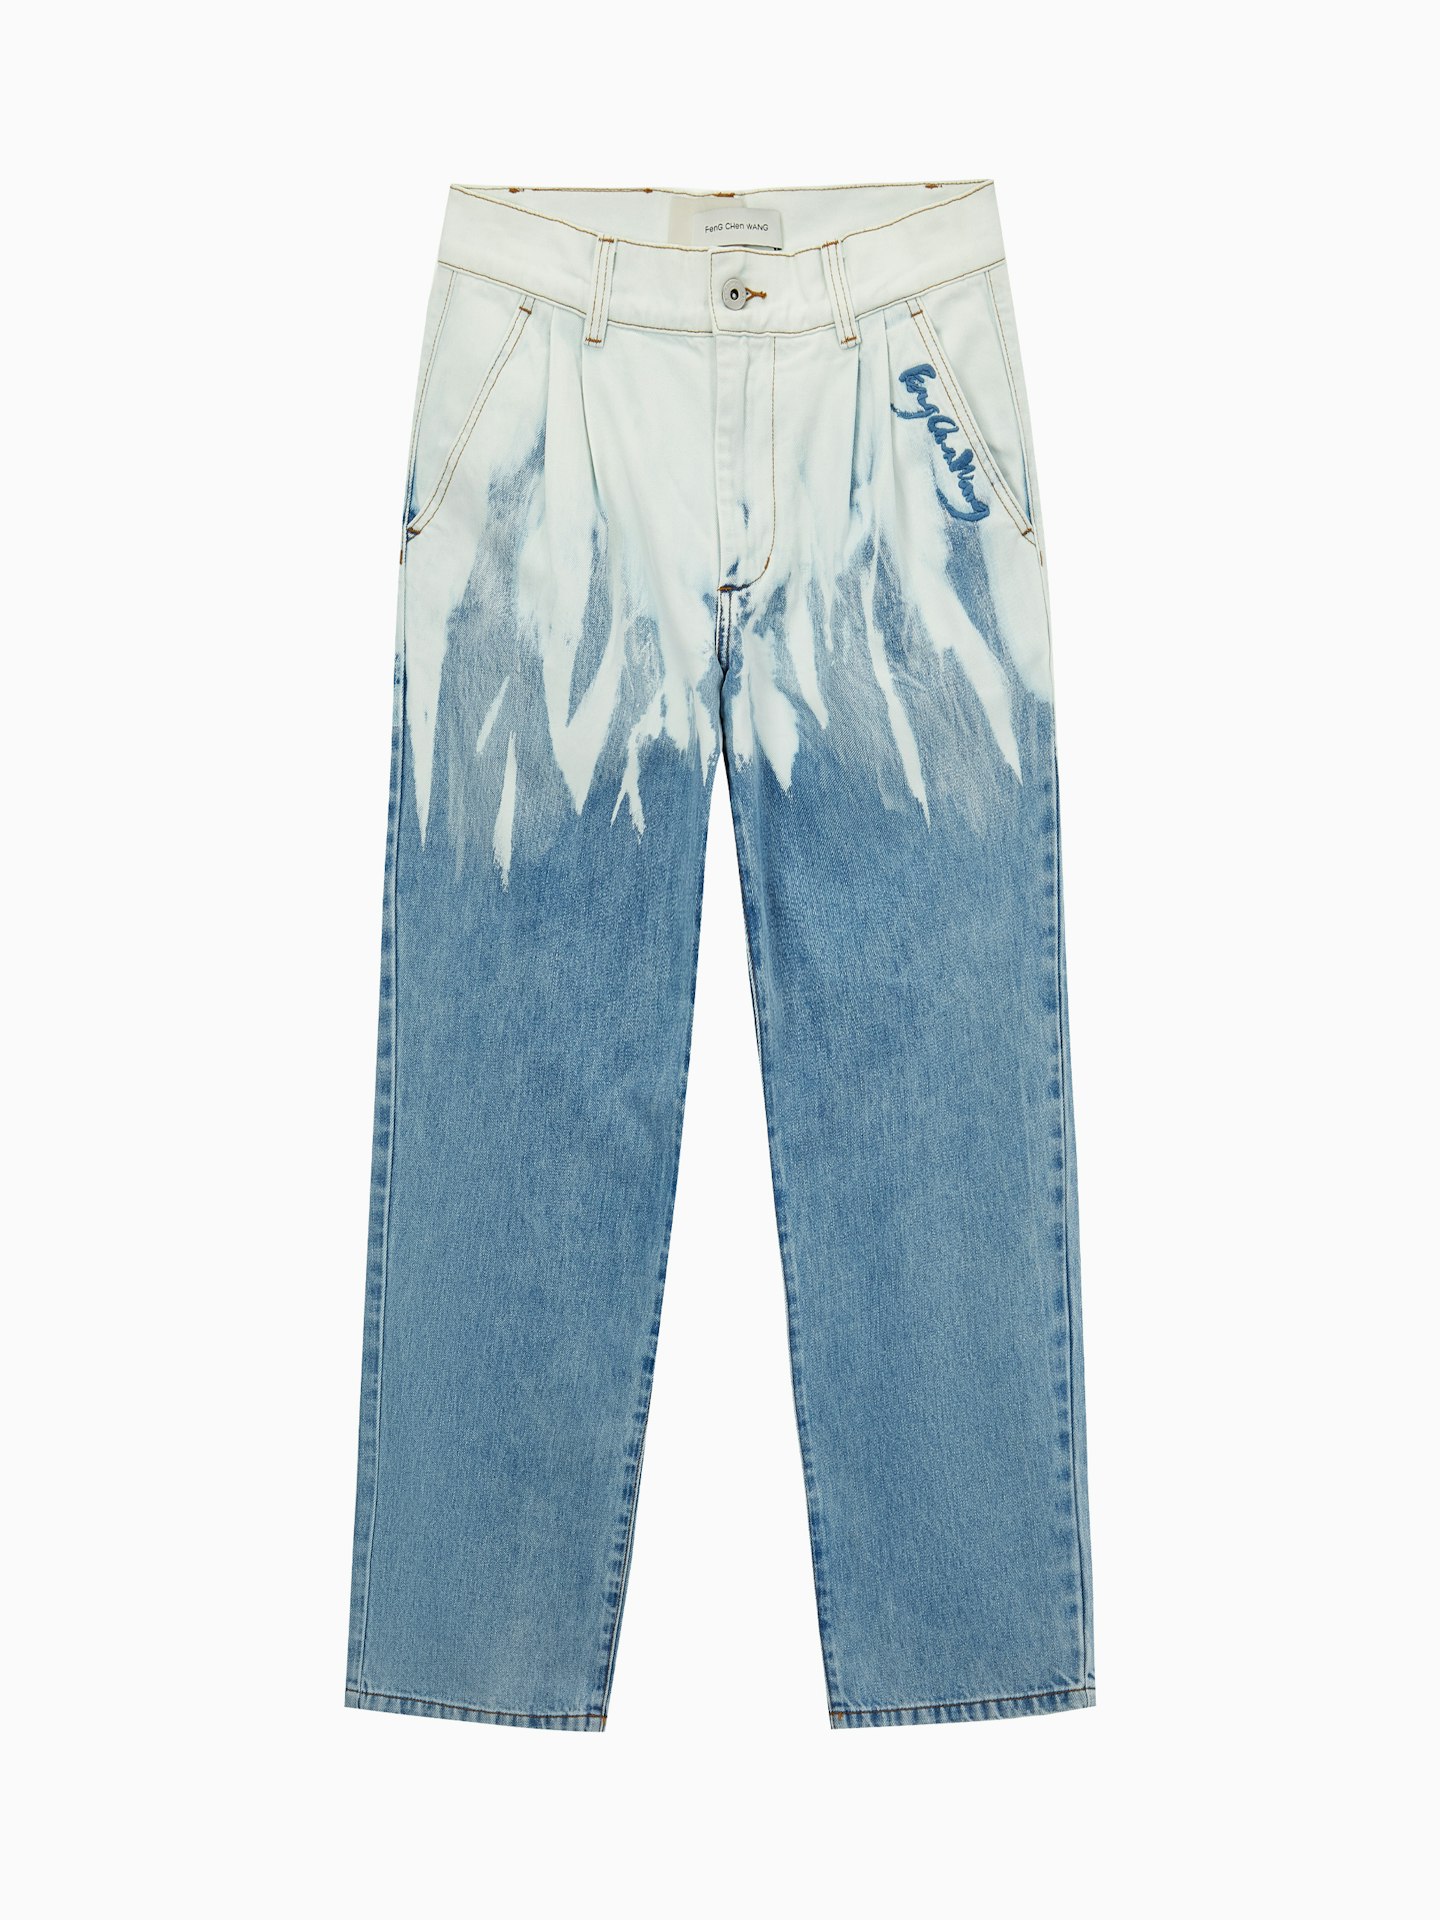 Feng Chen Wang, Acid Wash Denim Jeans, £300